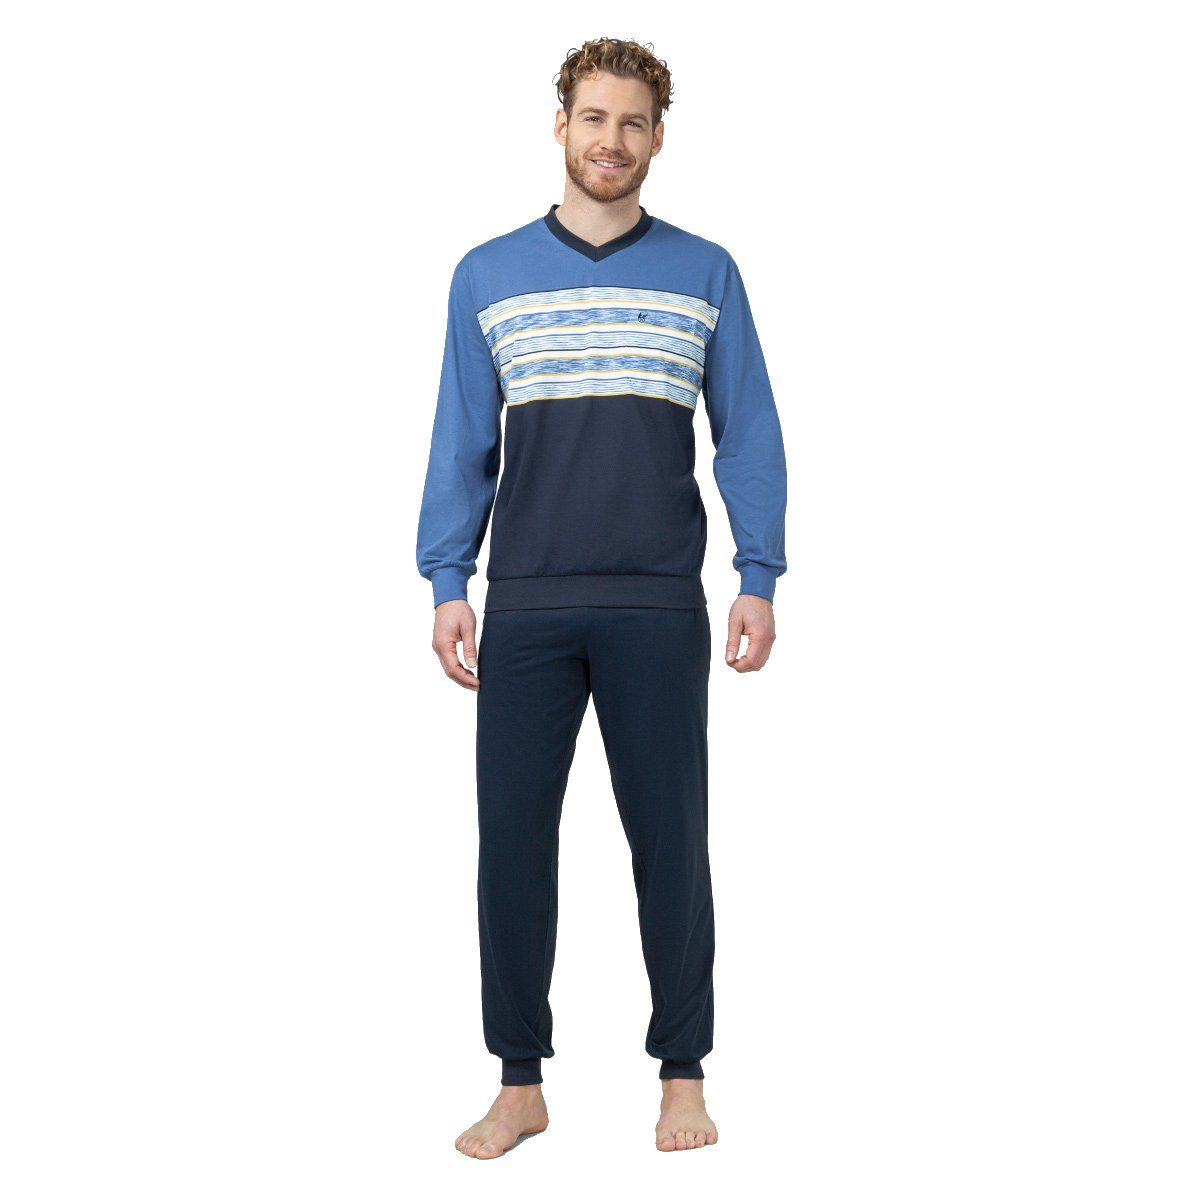 Wäsche/Bademode Nachtwäsche Hajo Pyjama HAJO Schlafanzug Klima-Komfort bügelfrei 53435 bügelfrei